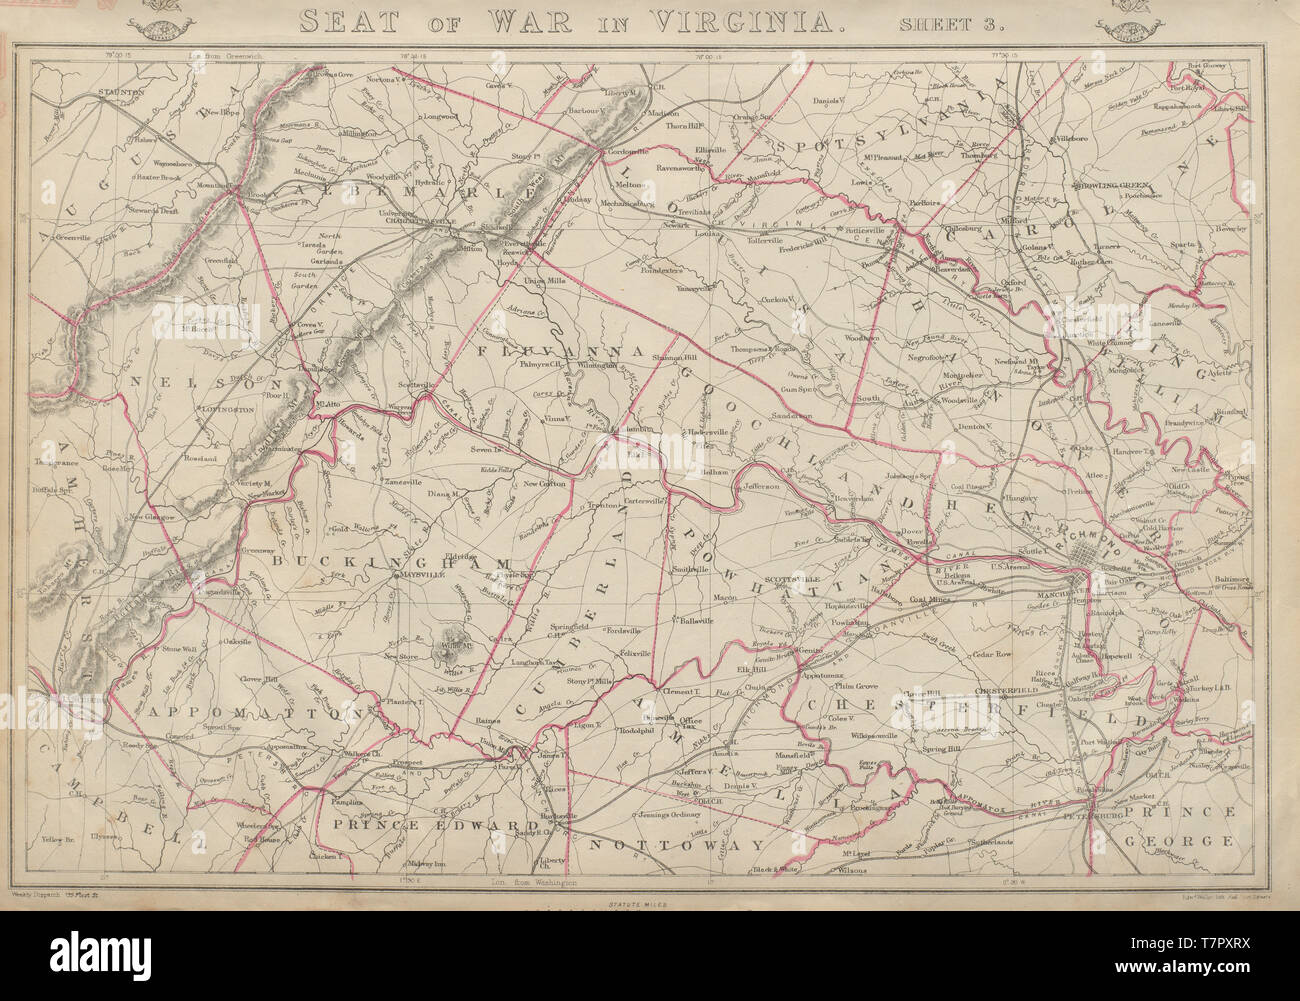 US CIVIL WAR Seat of War in Virginia sheet 3 Richmond Lynchburg. WELLER 1863 map Stock Photo